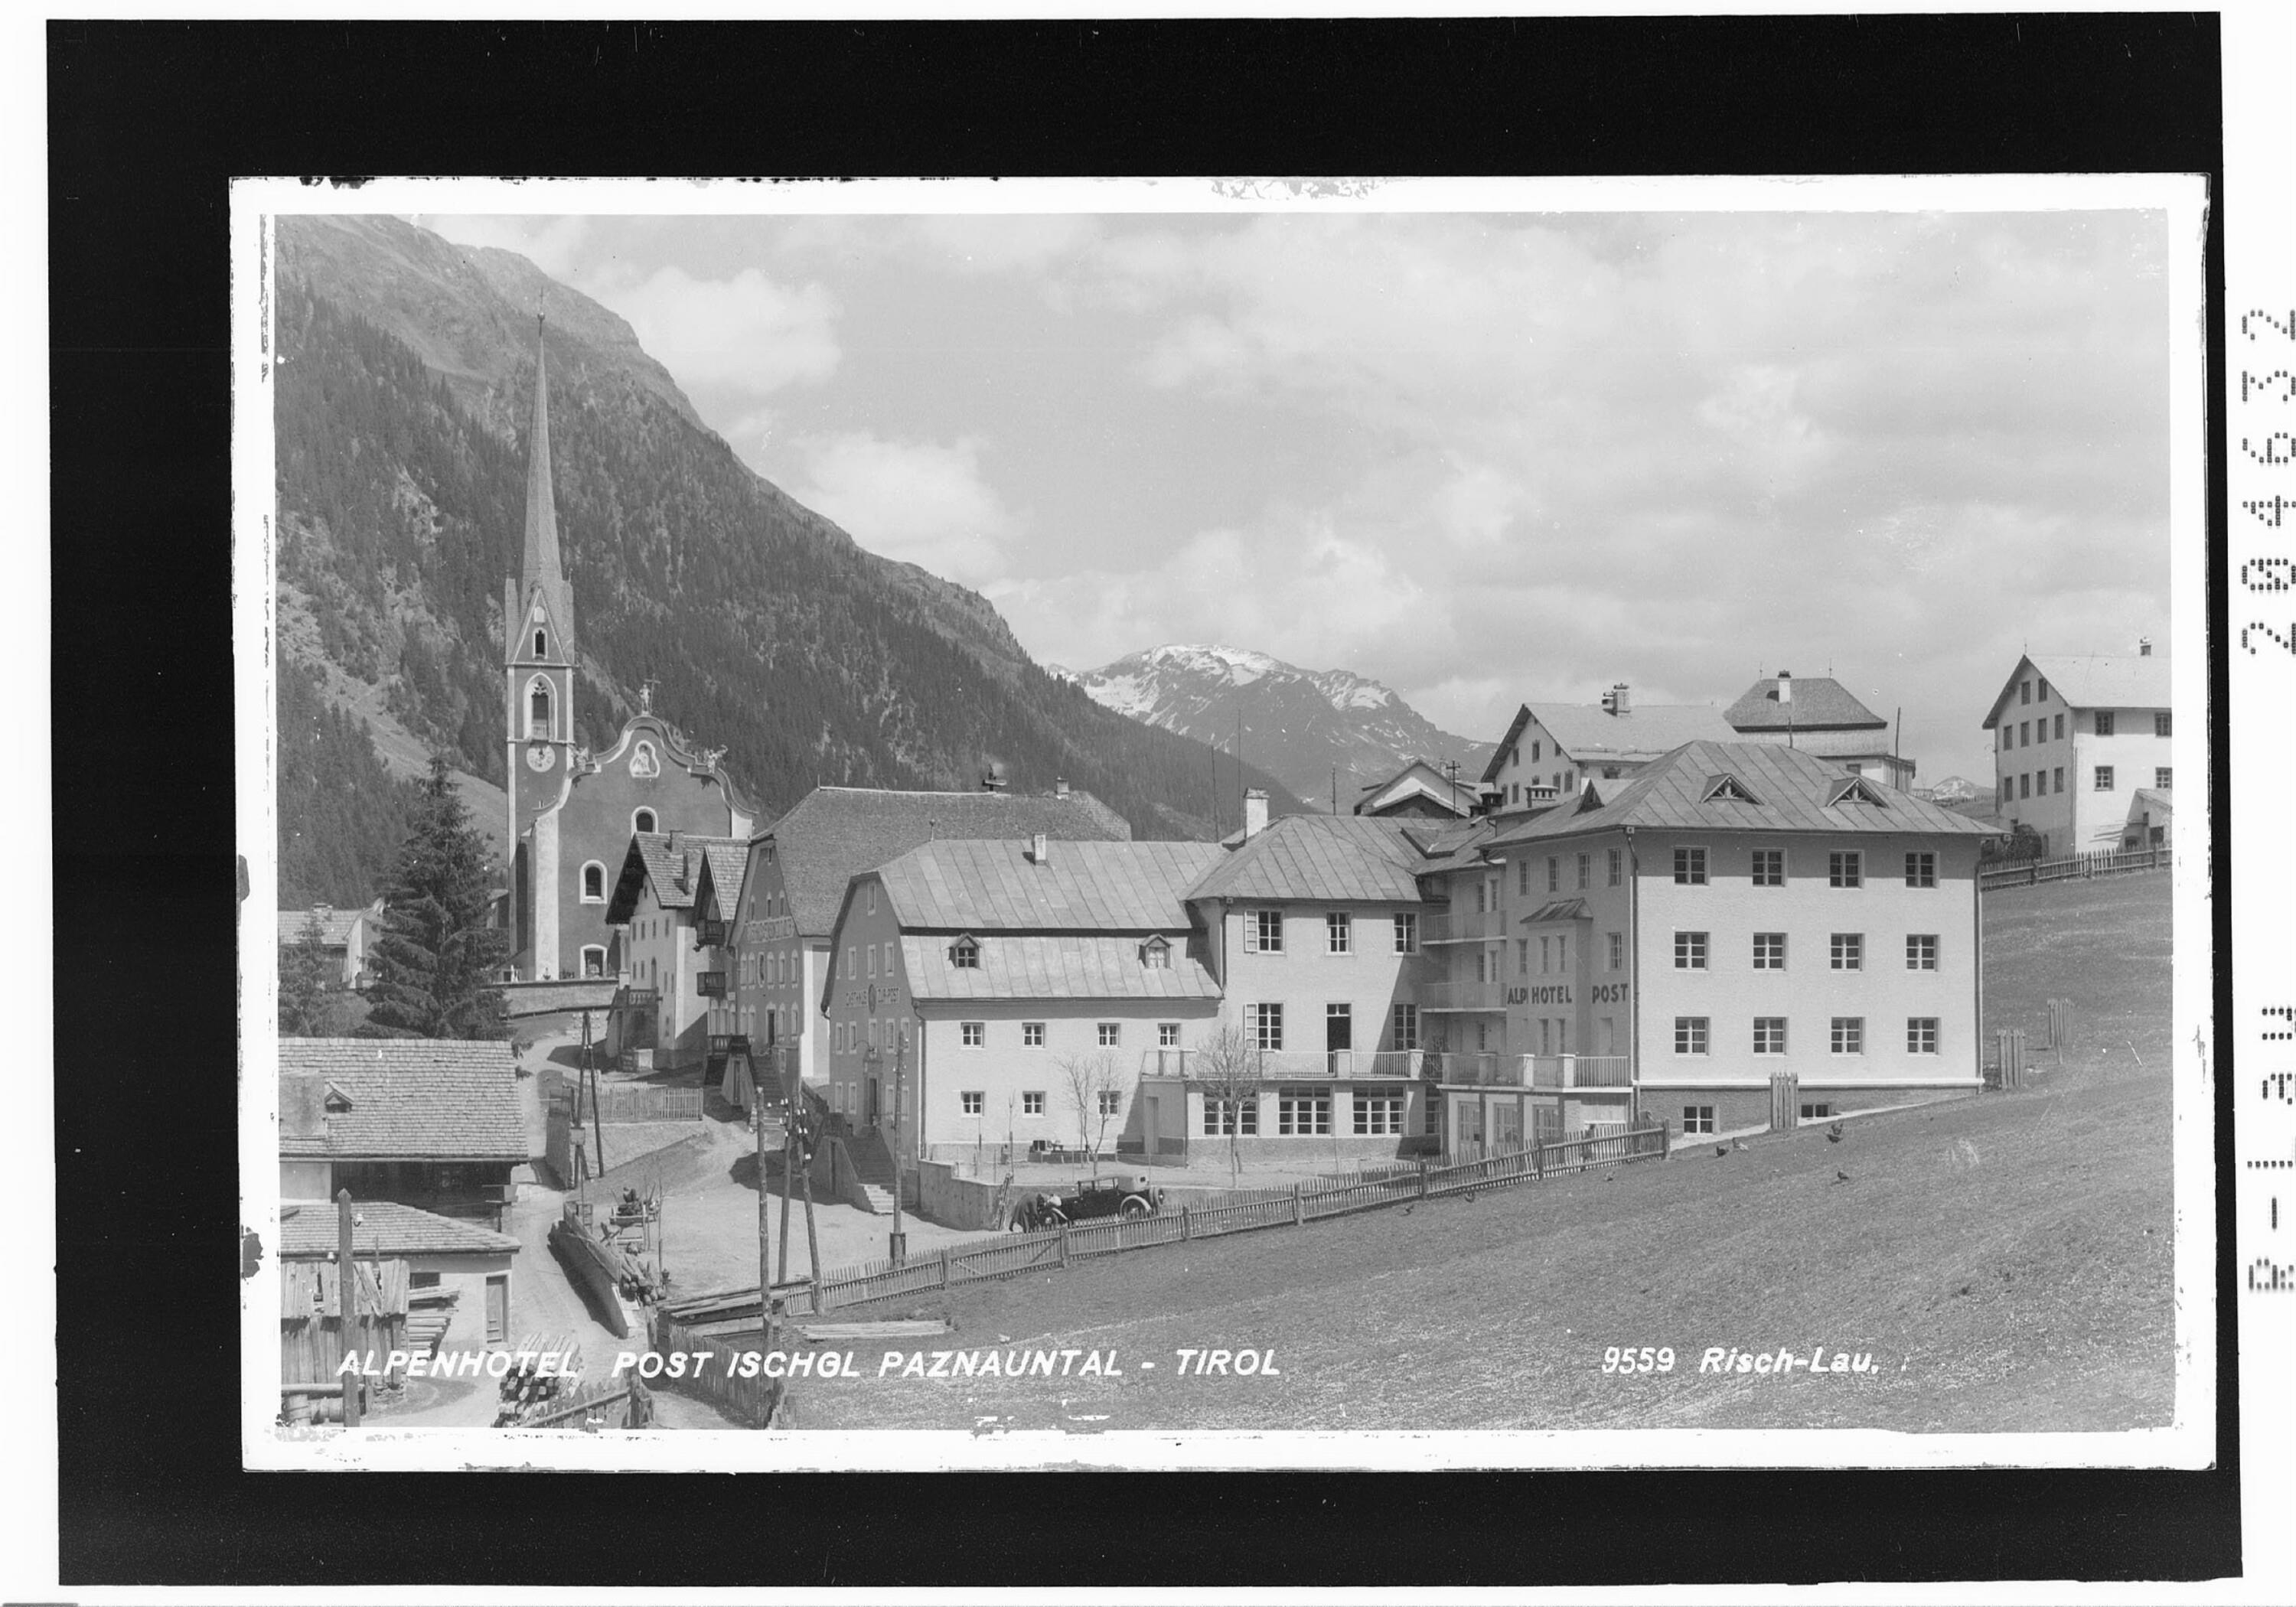 Alpenhotel Post Ischgl Paznauntal - Tirol></div>


    <hr>
    <div class=